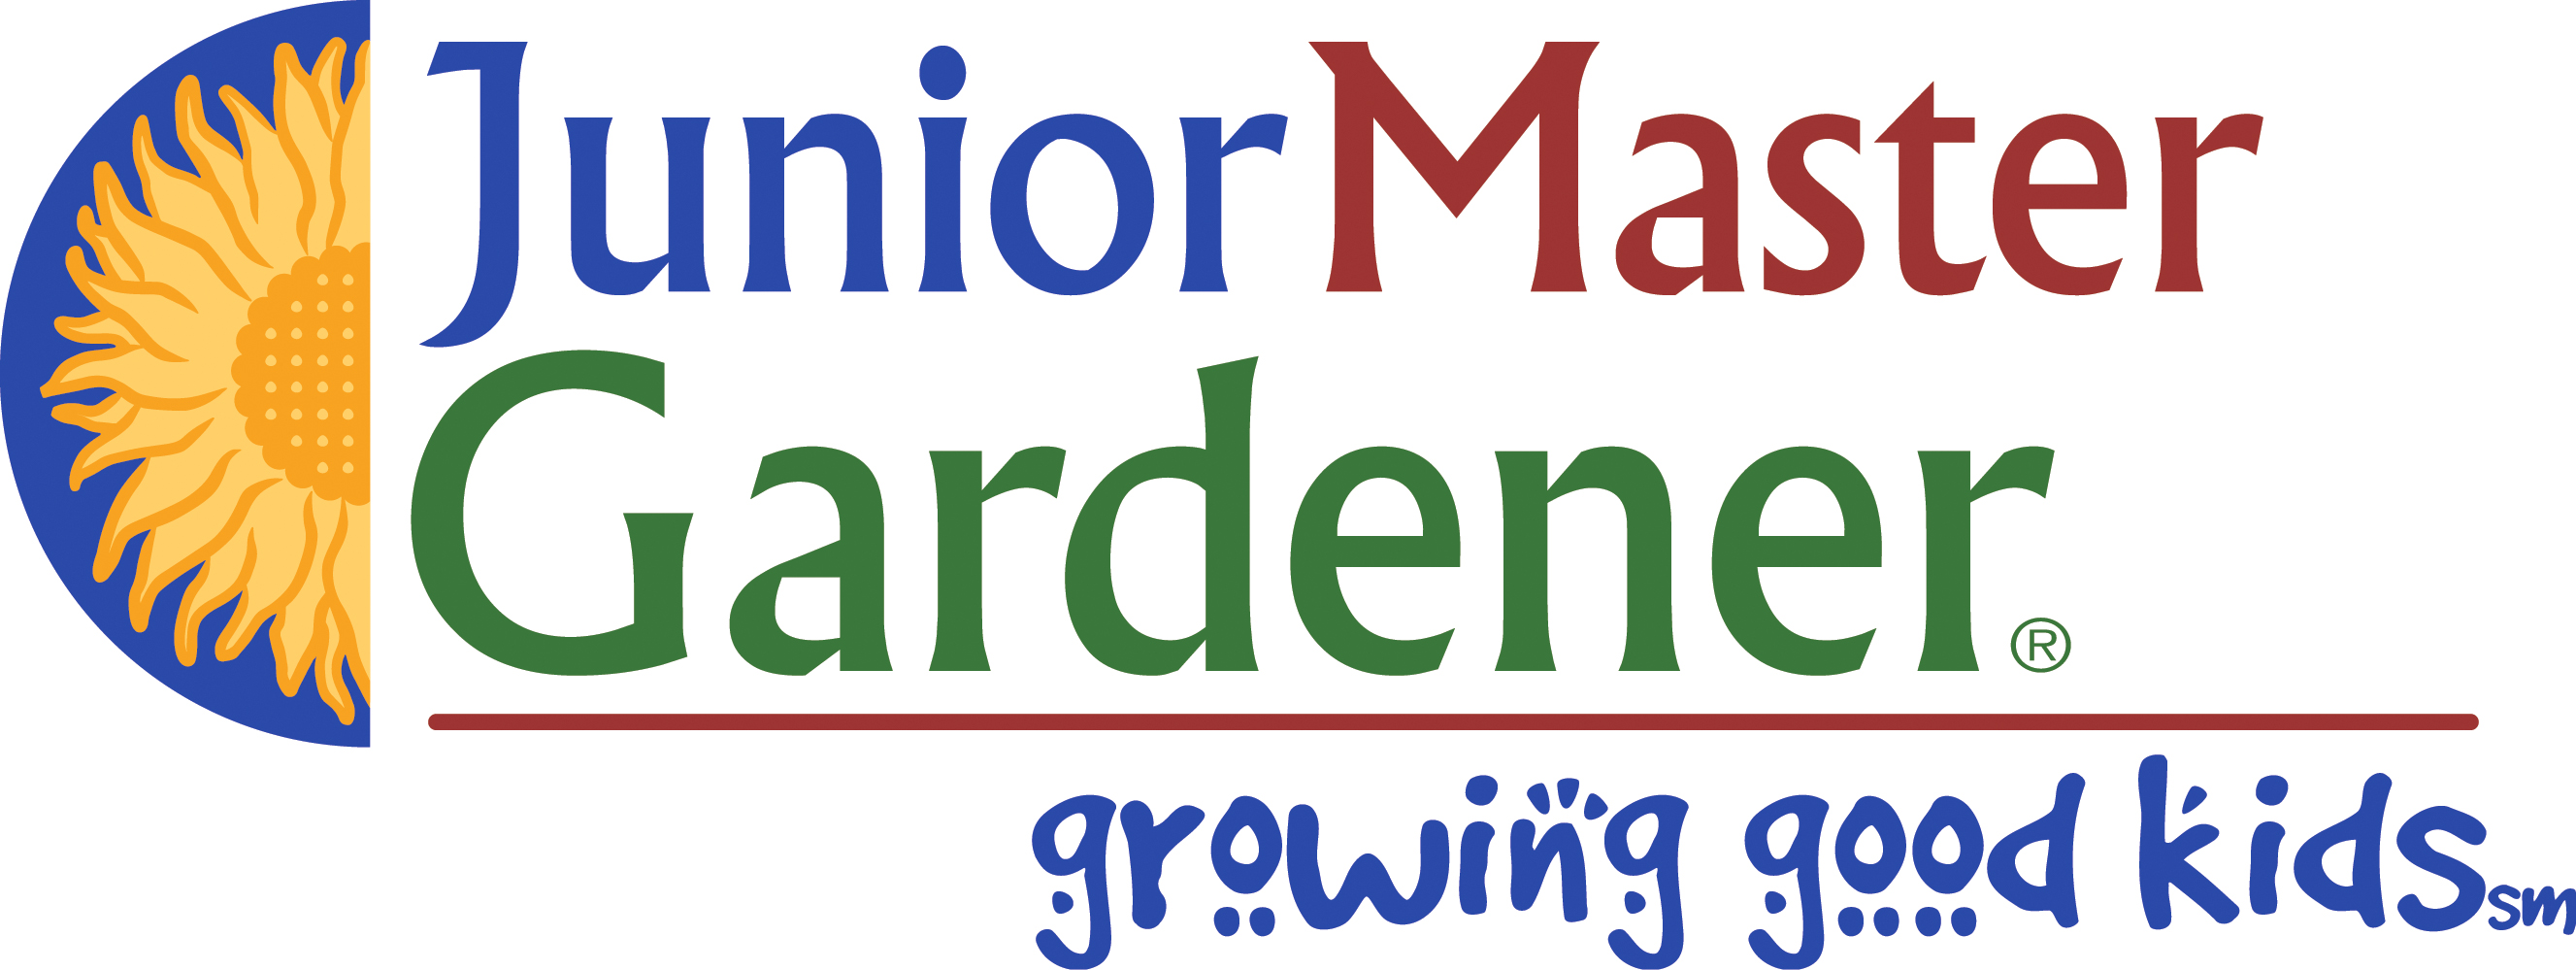 Download Jmg Art Junior Master Gardener